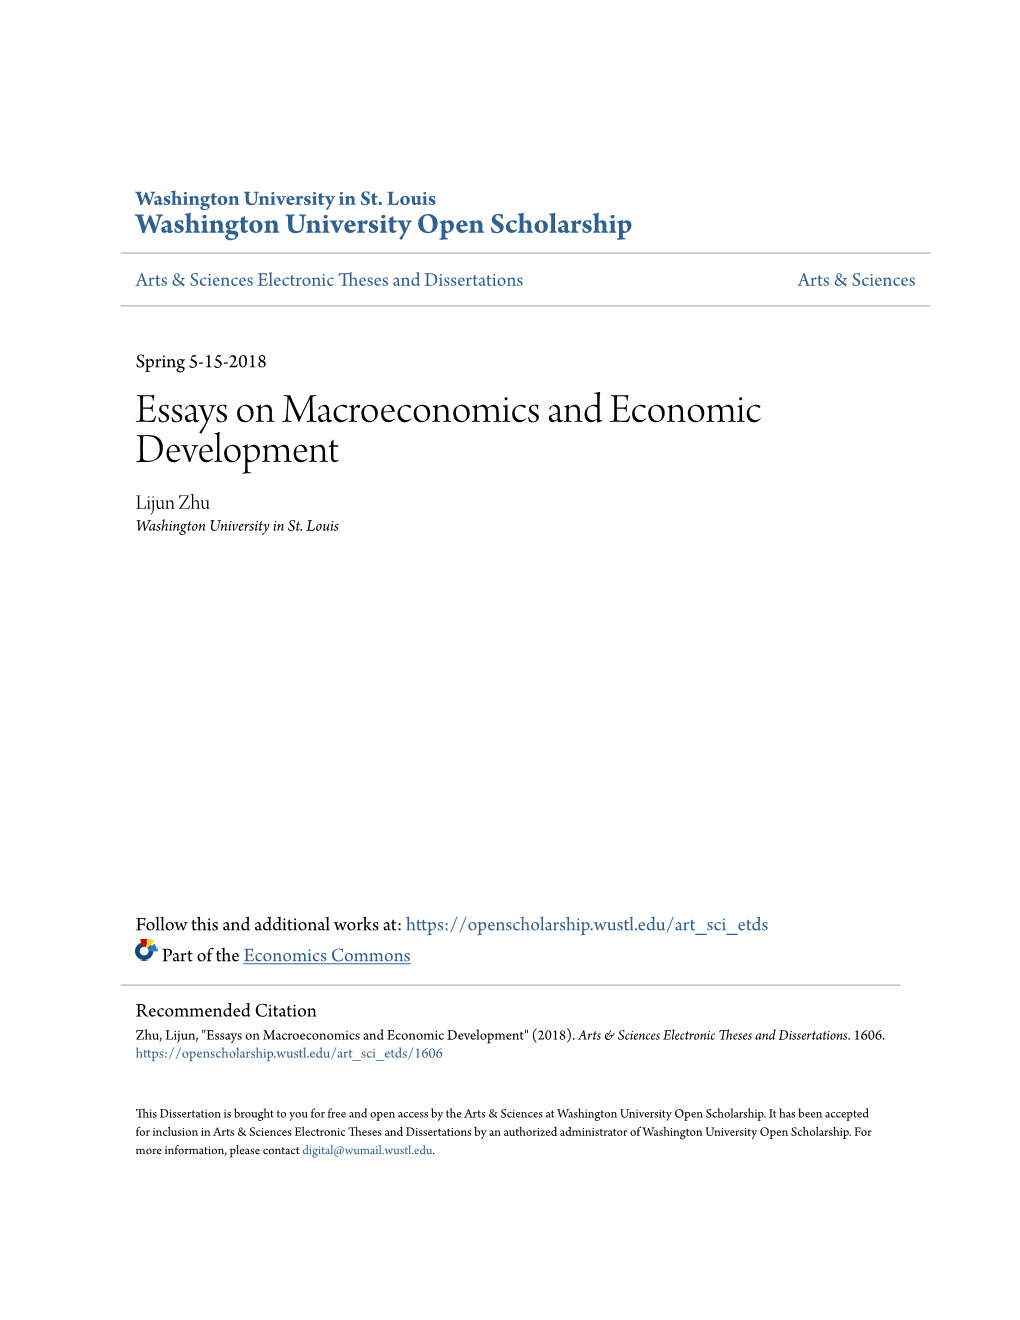 Essays on Macroeconomics and Economic Development Lijun Zhu Washington University in St